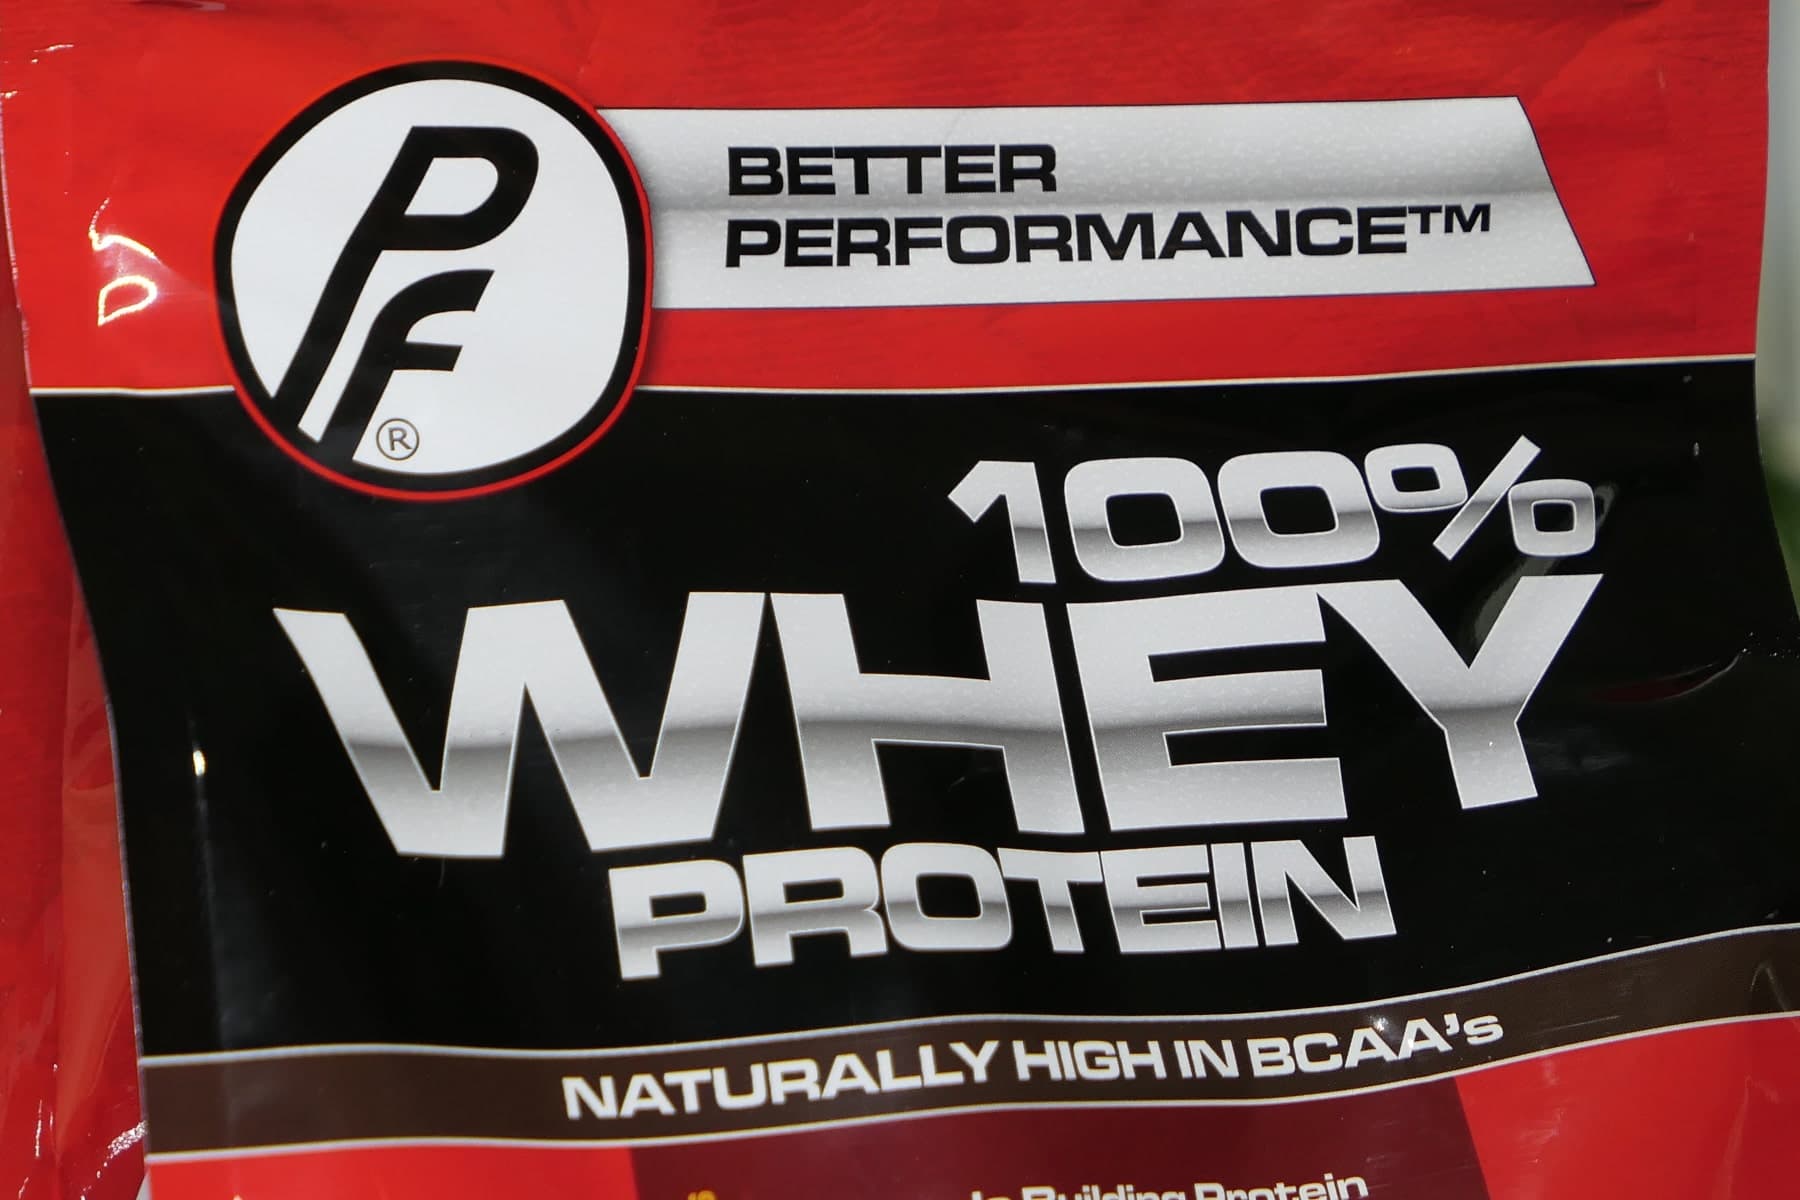 100% whey proteinfabrikken